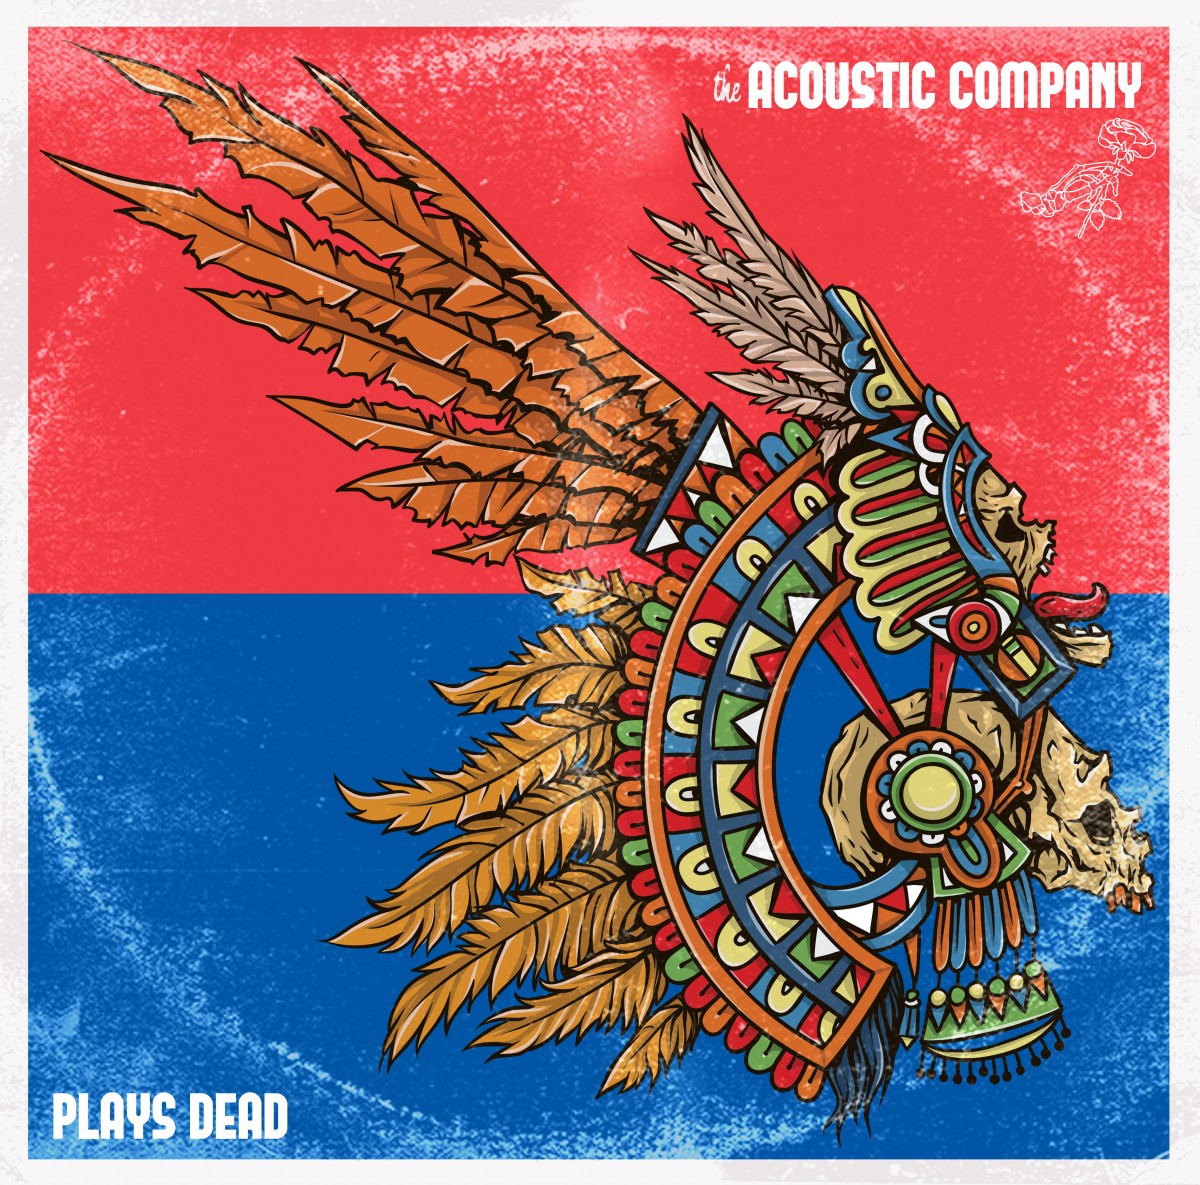 Album Review: The Acoustic Company, Plays Dead